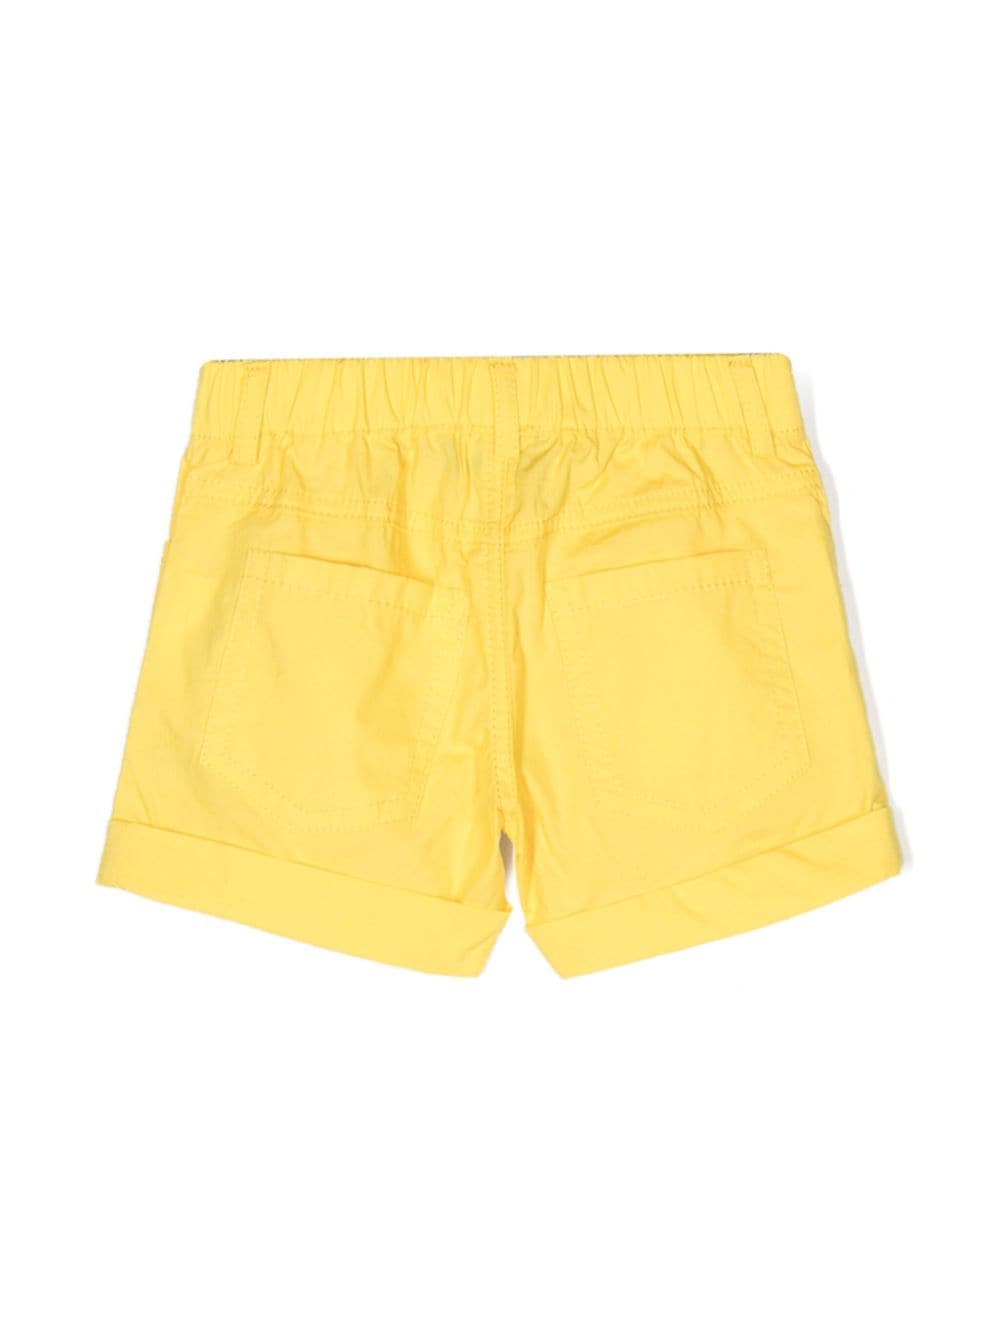 Shorts neonato giallo